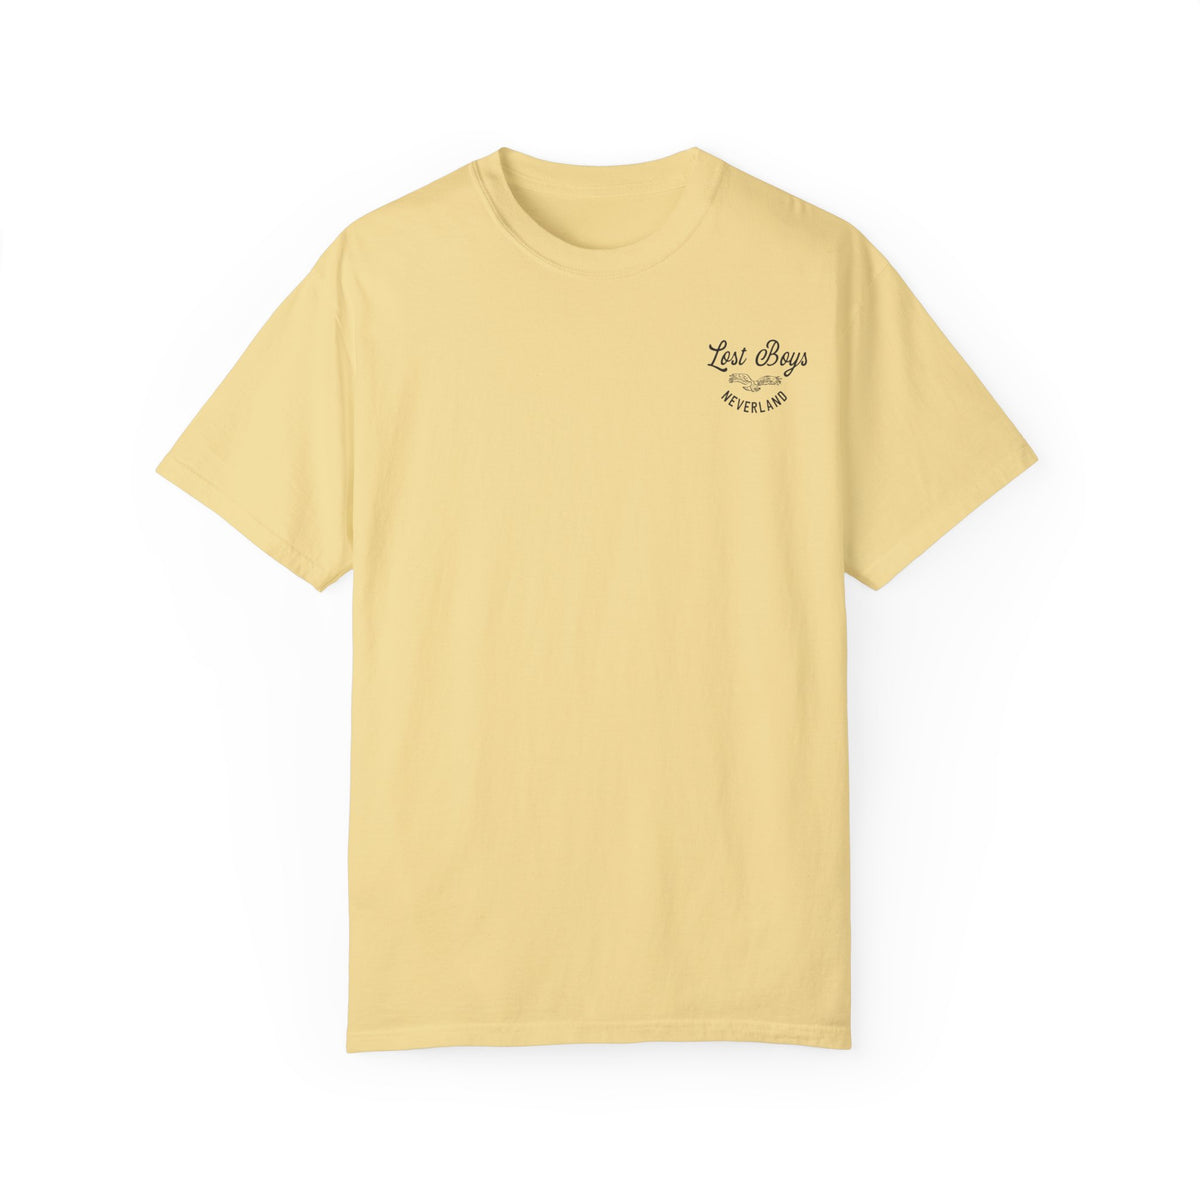 Bangarang Comfort Colors Unisex Garment-Dyed T-shirt